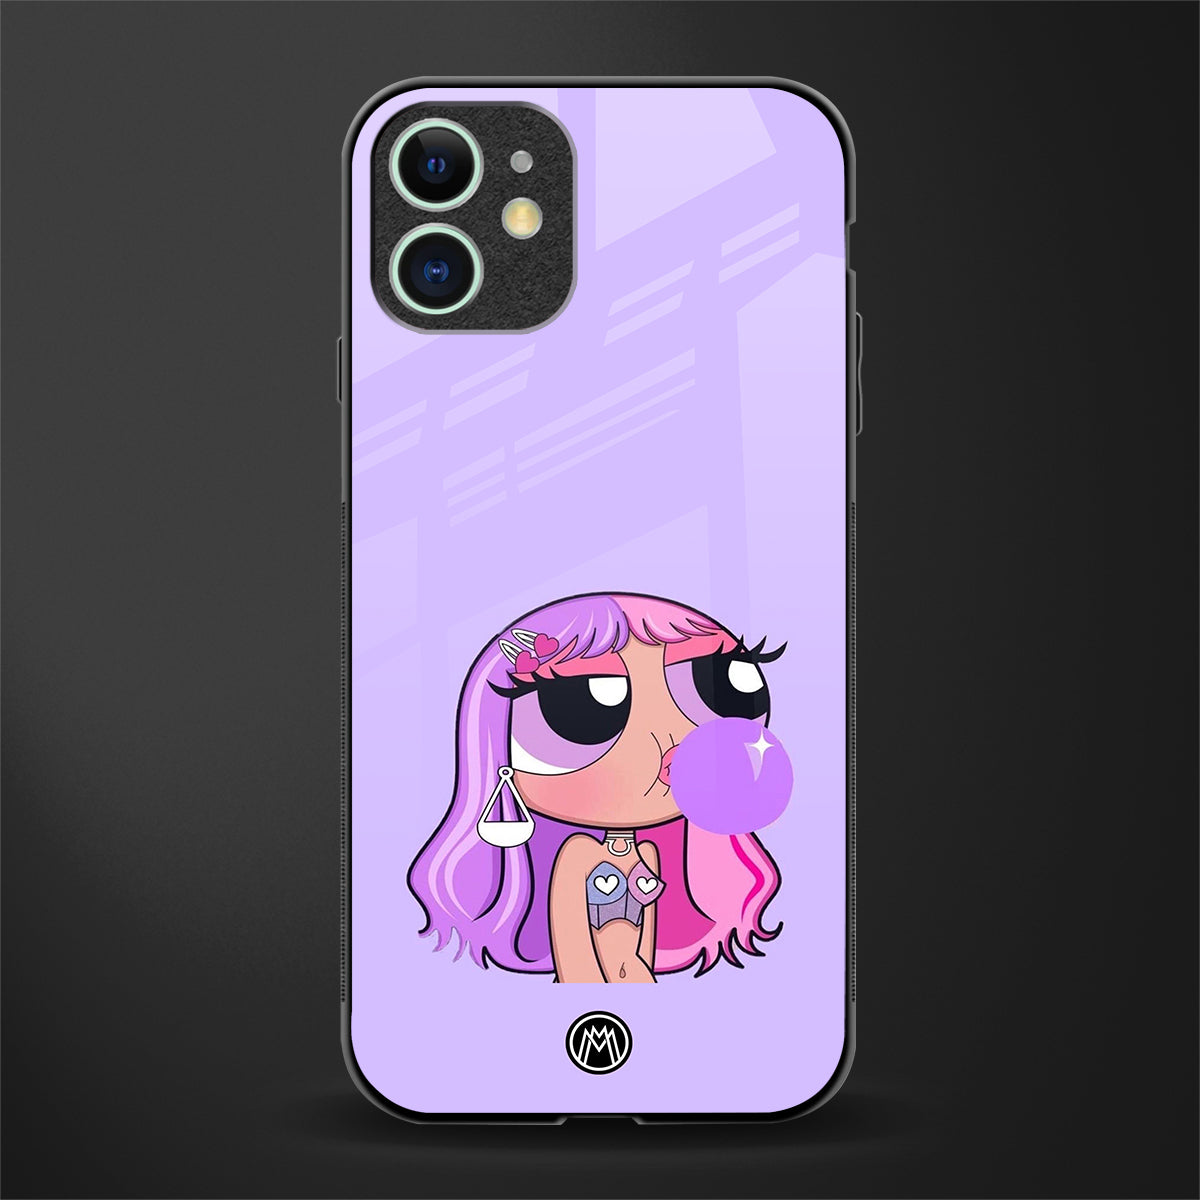 purple chic powerpuff girls glass case for iphone 11 image